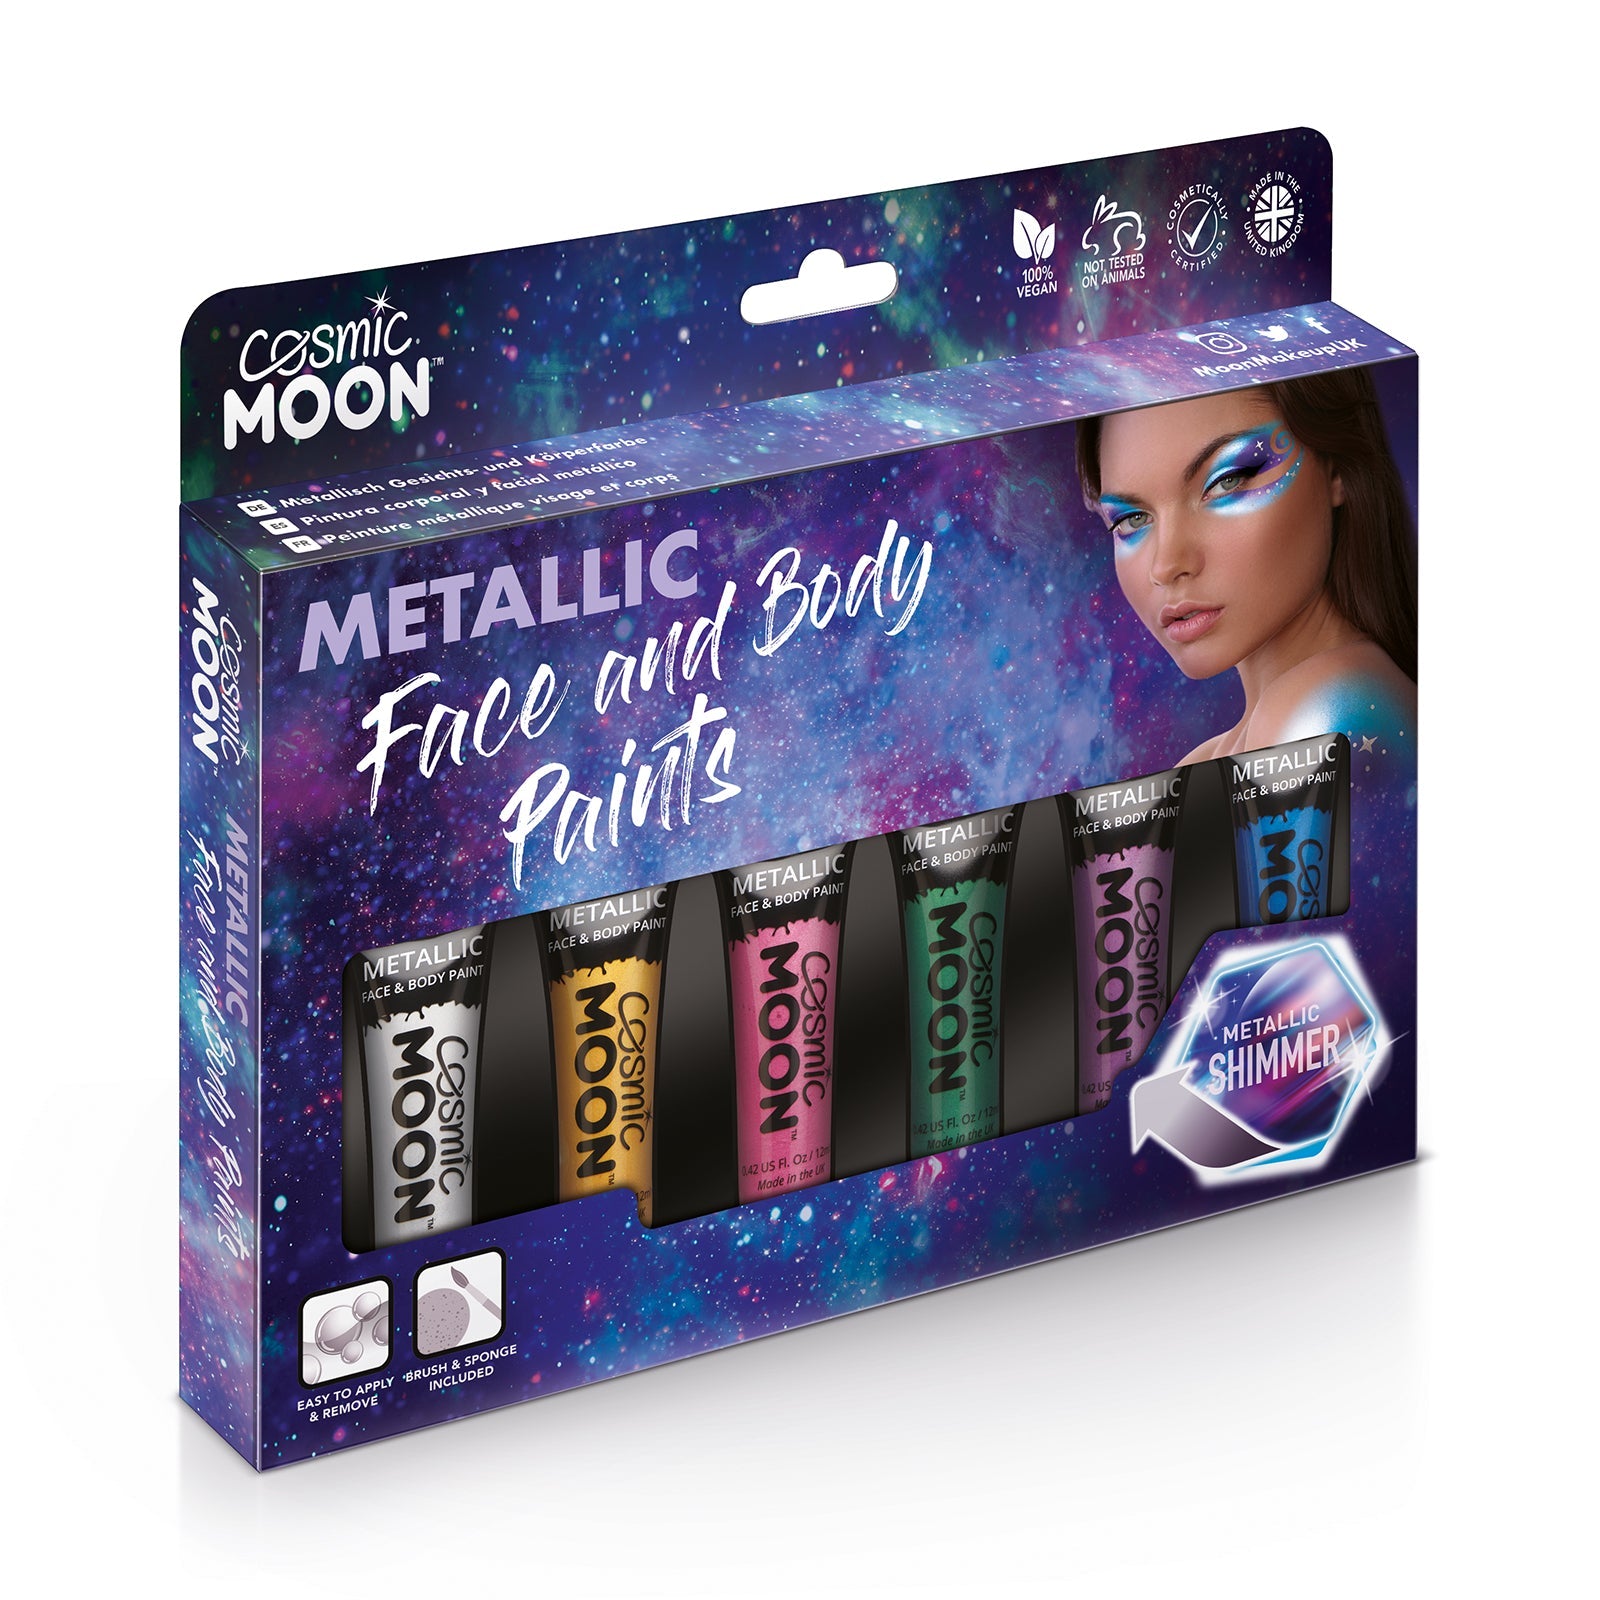 Metallic Face & Body Paint Makeup Boxset - 6 tubes, brush, sponge. Cosmetically certified, FDA & Health Canada compliant, cruelty free and vegan.